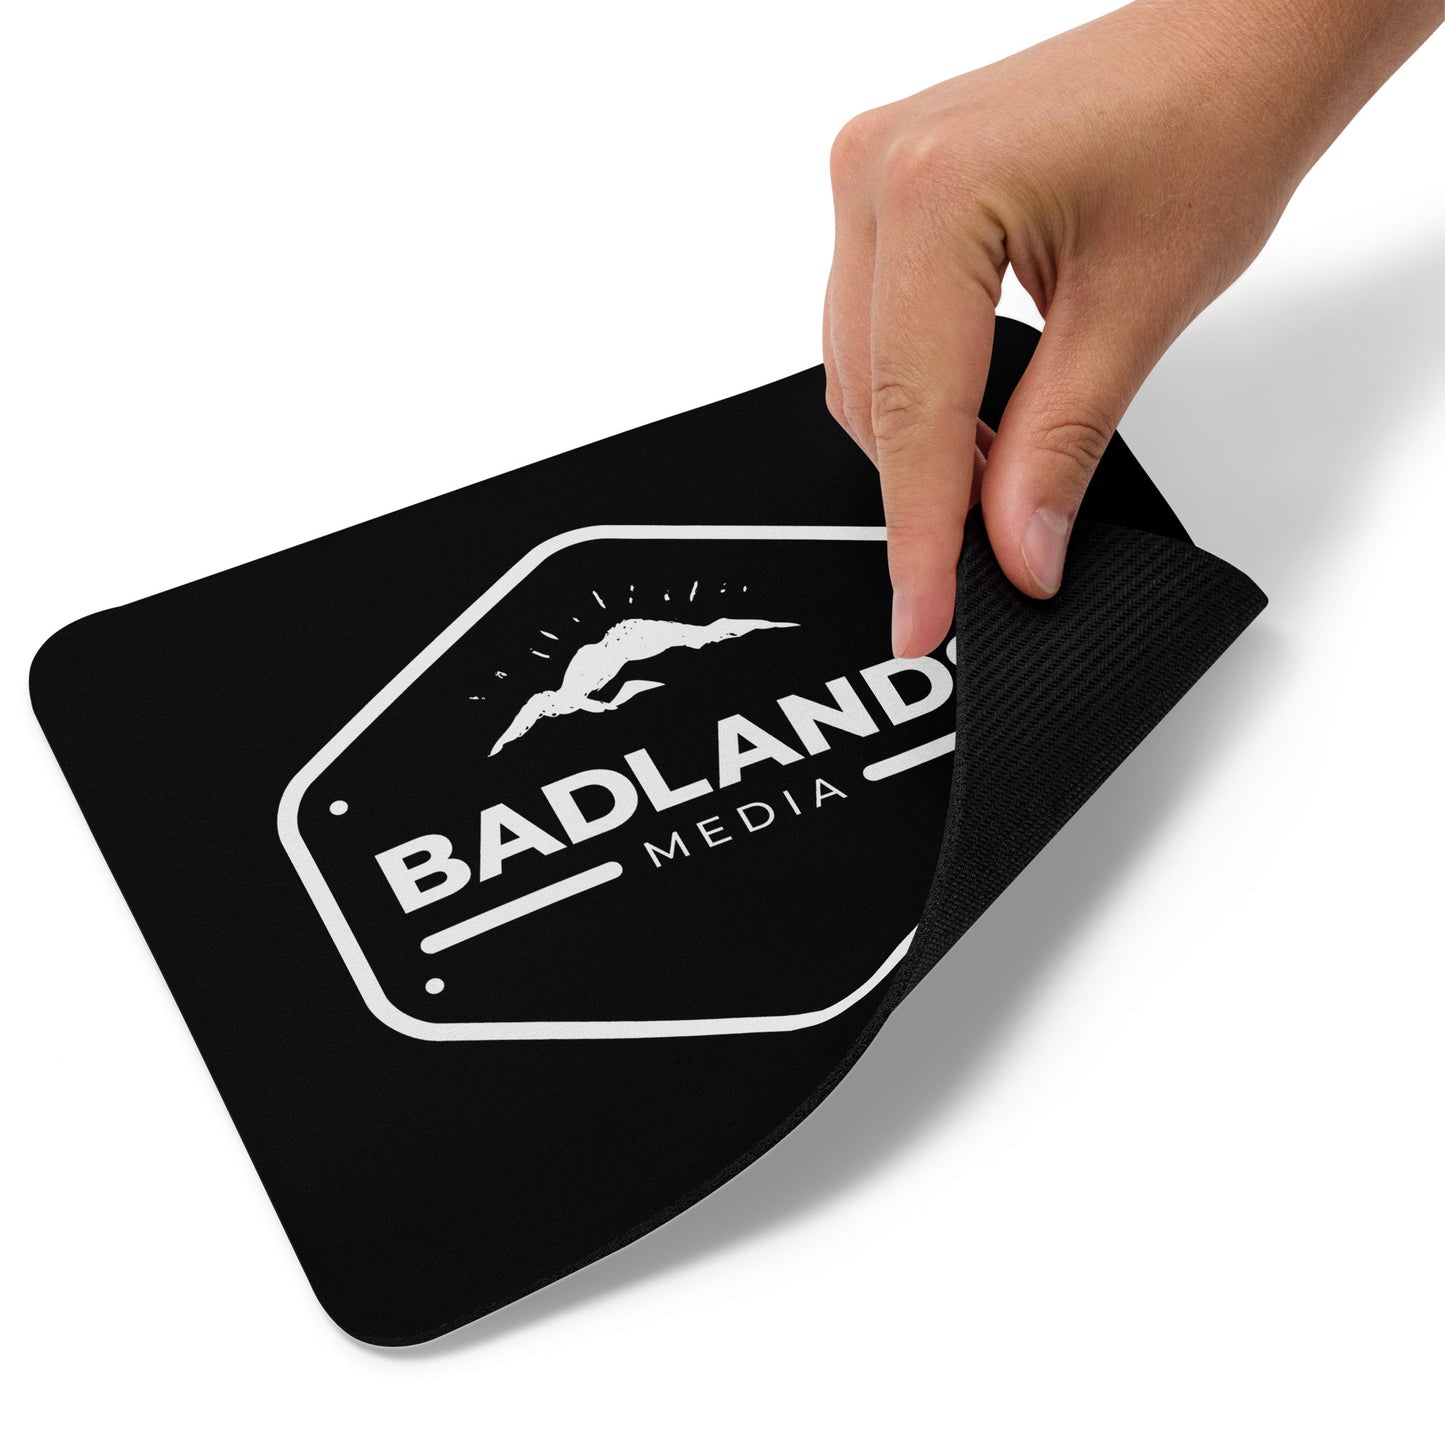 Badlands Mouse Pad in black